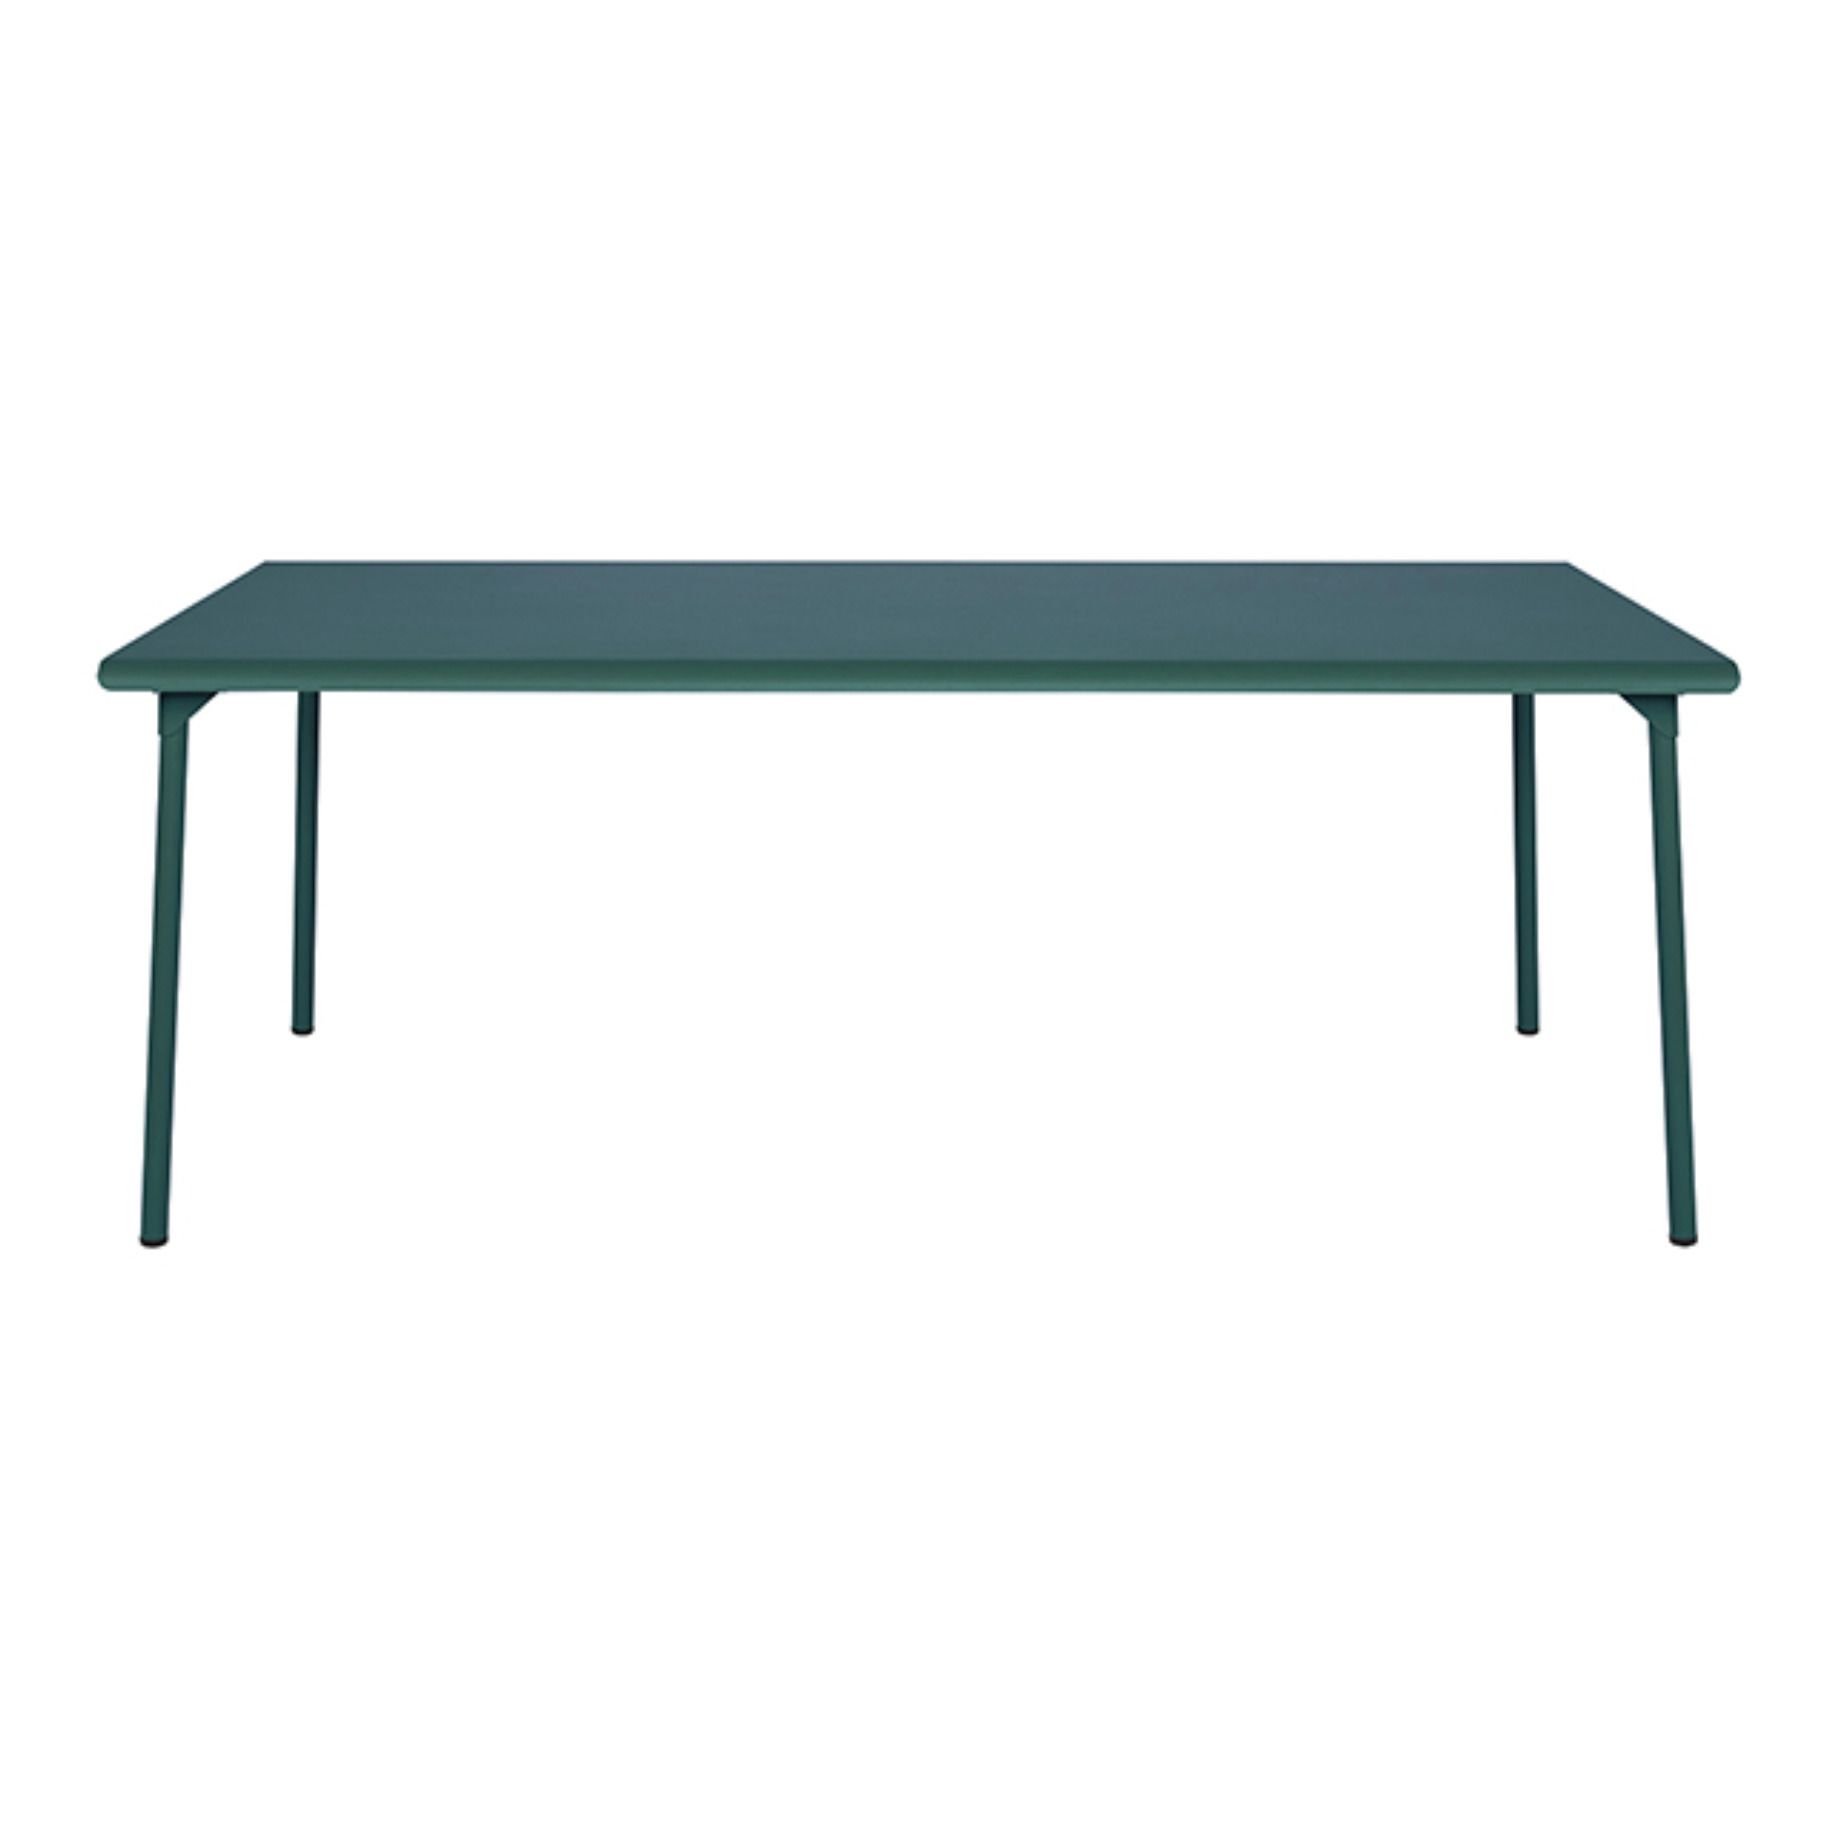 Tolix - Table outdoor Patio en inox - 200x100 cm - Vert Empire